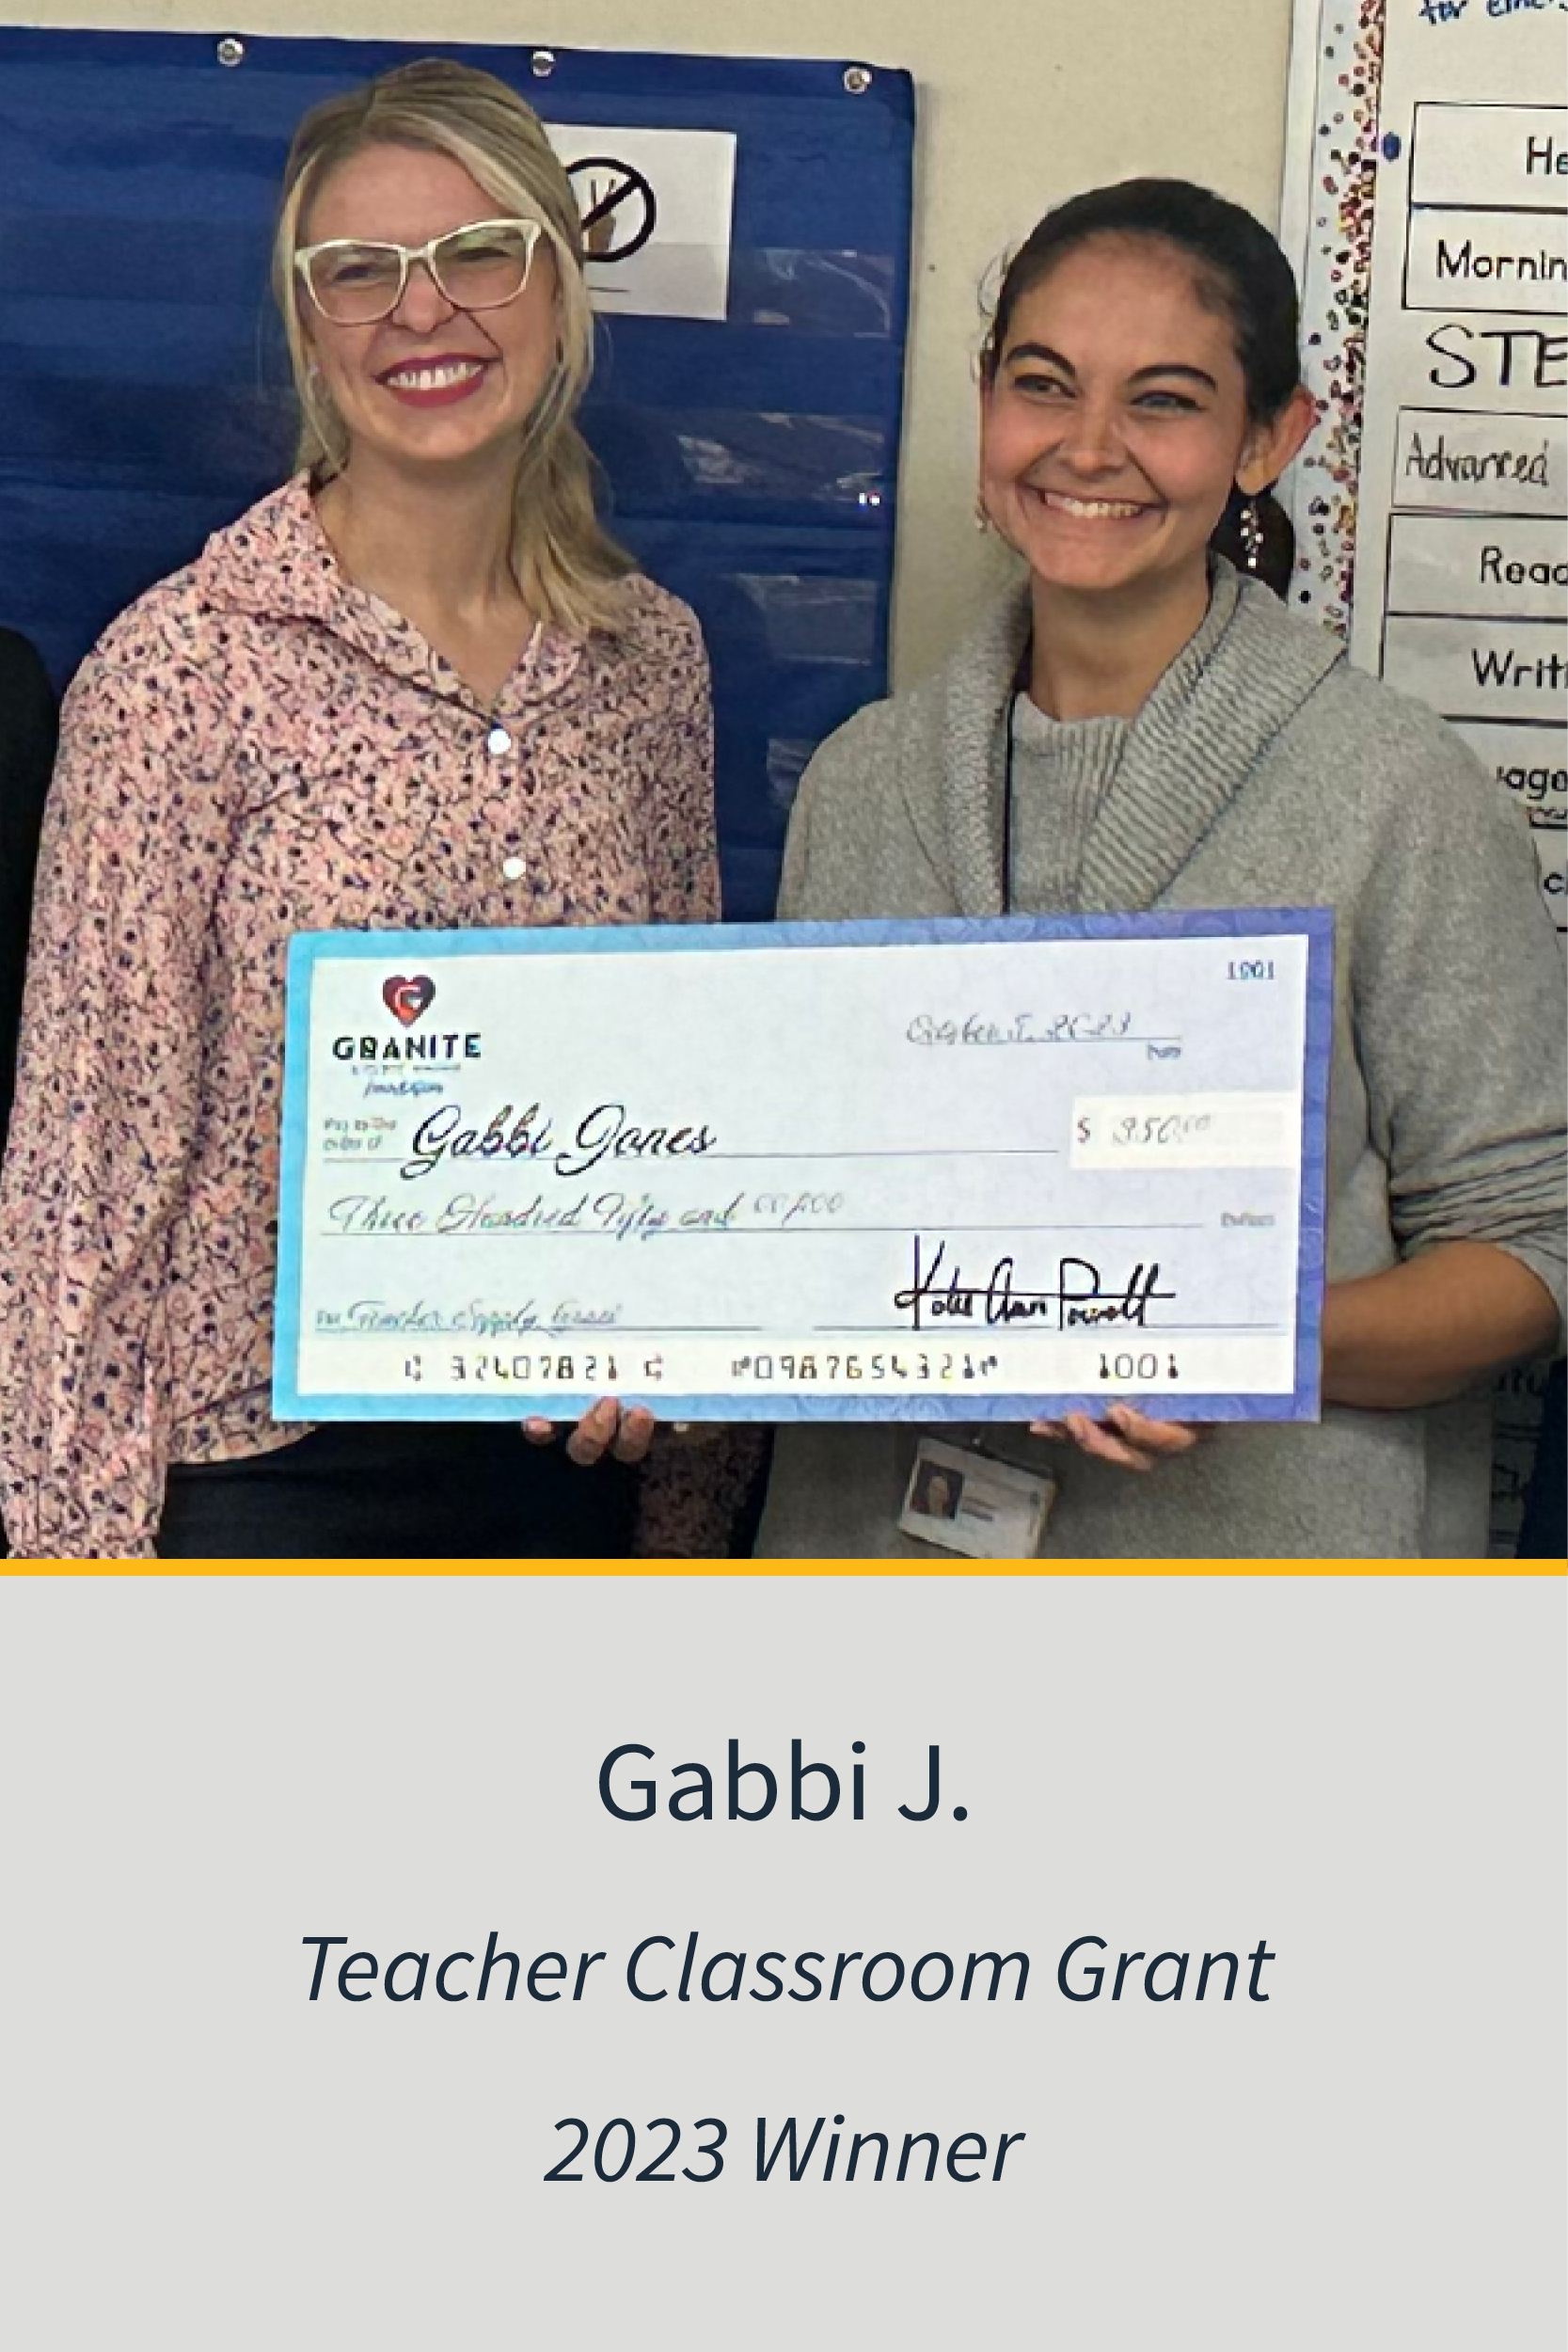 Teachers Classroom Grant 2023 Winner Gabby J.